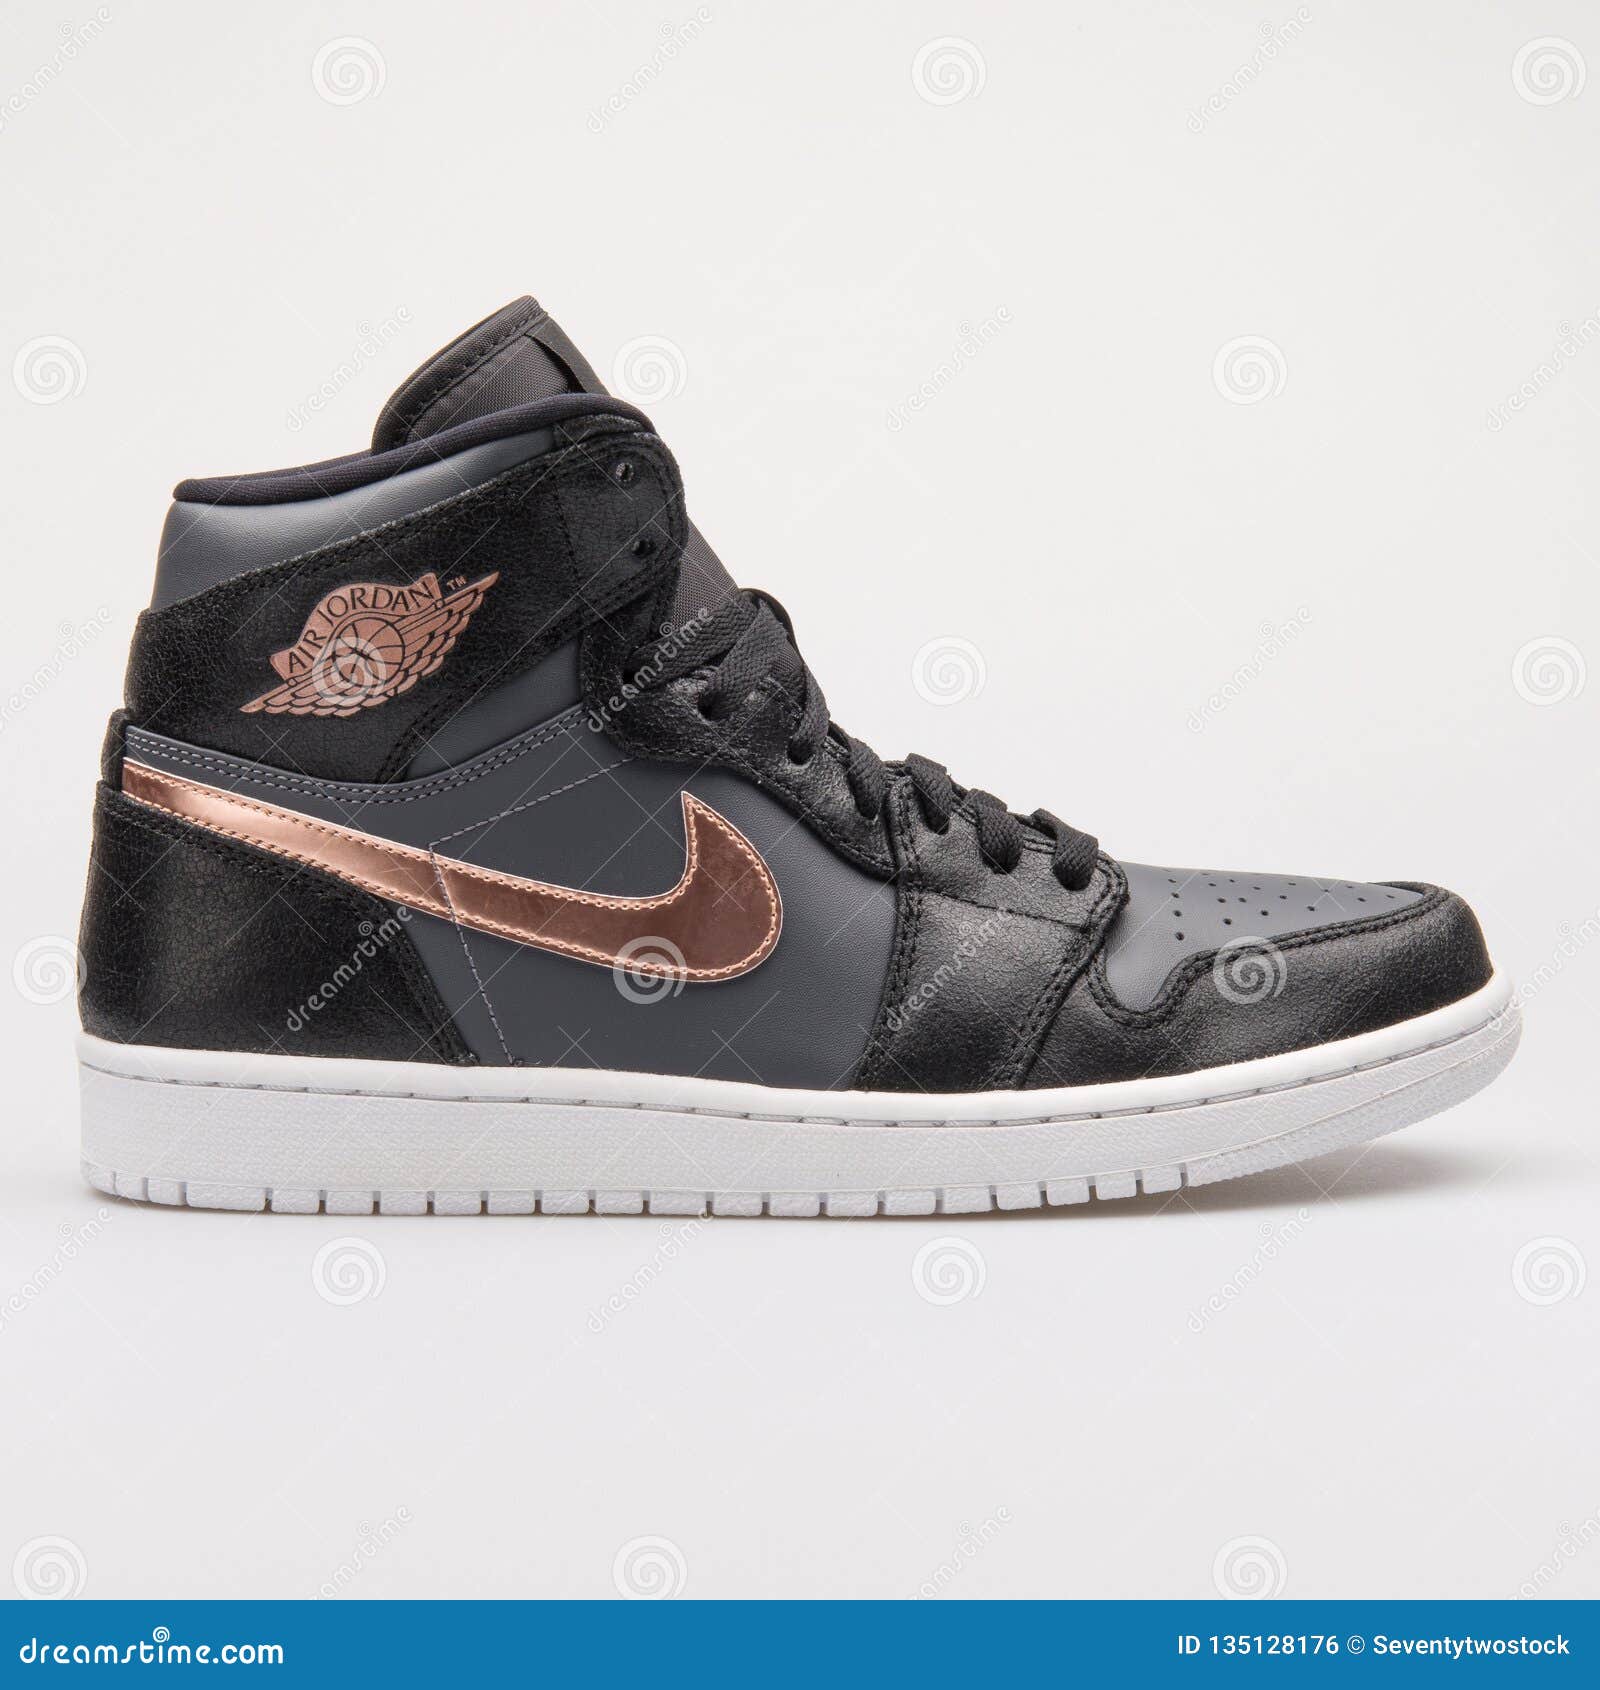 Nike Air Jordan 1 Retro High Black, Rose Gold and White Sneaker Editorial Photo Image of fashion, back: 135128176